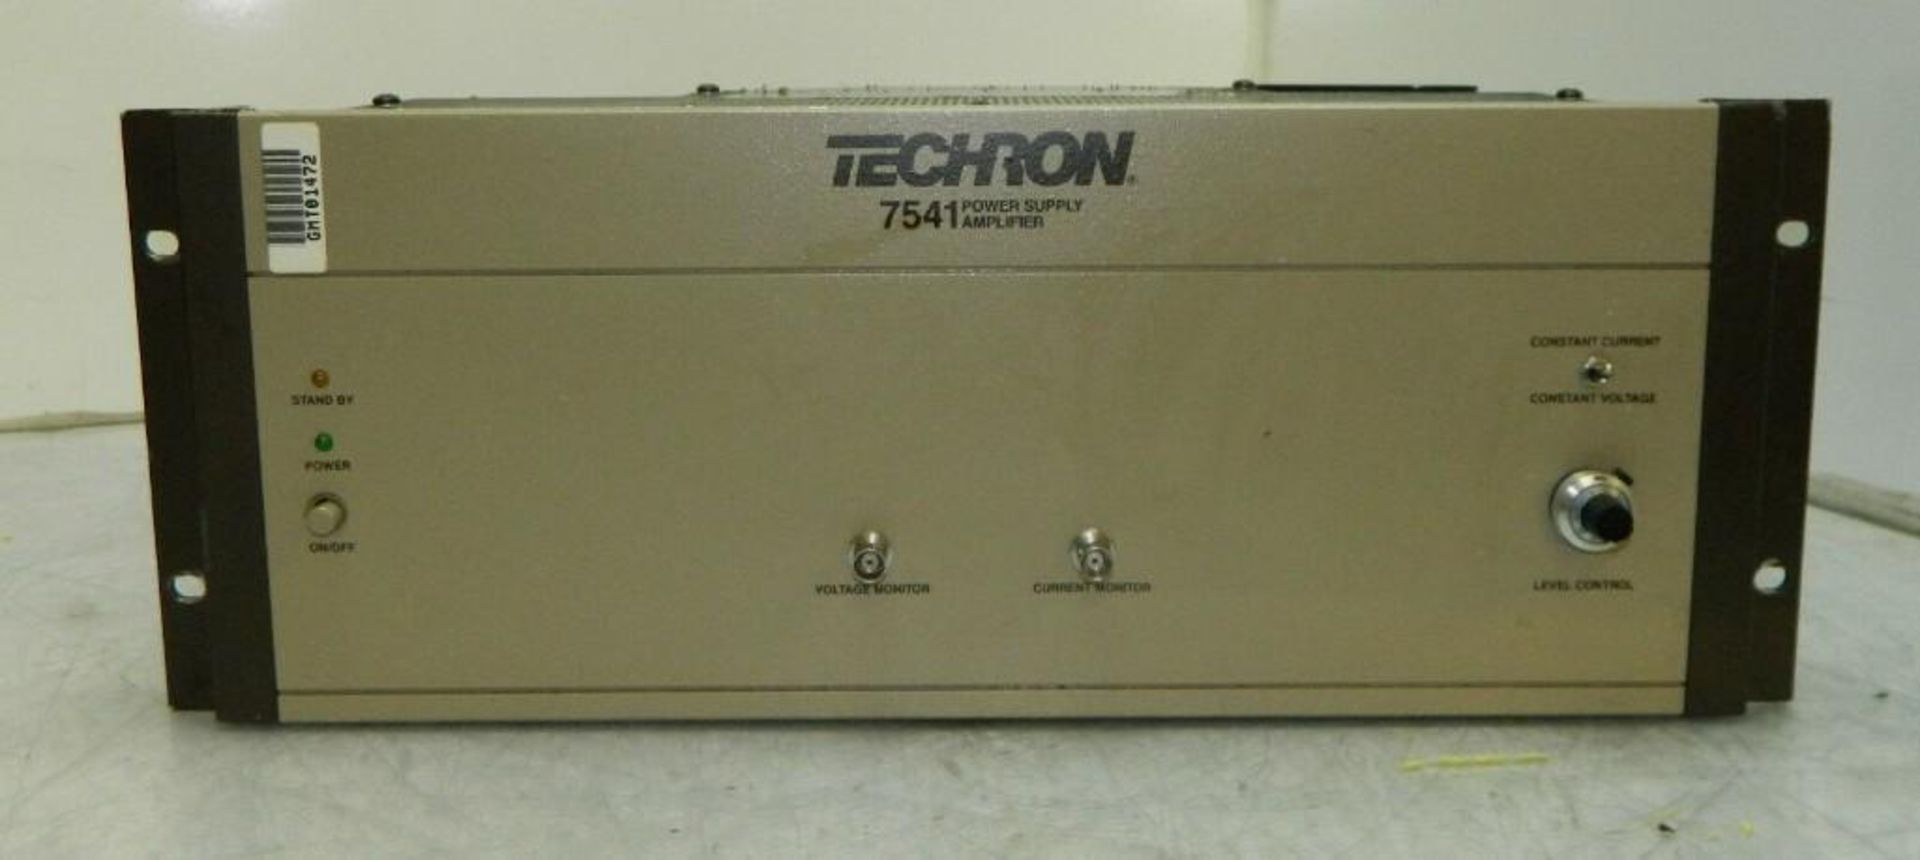 Lot of (4) Techtron 7541 Power Supply Amplifier